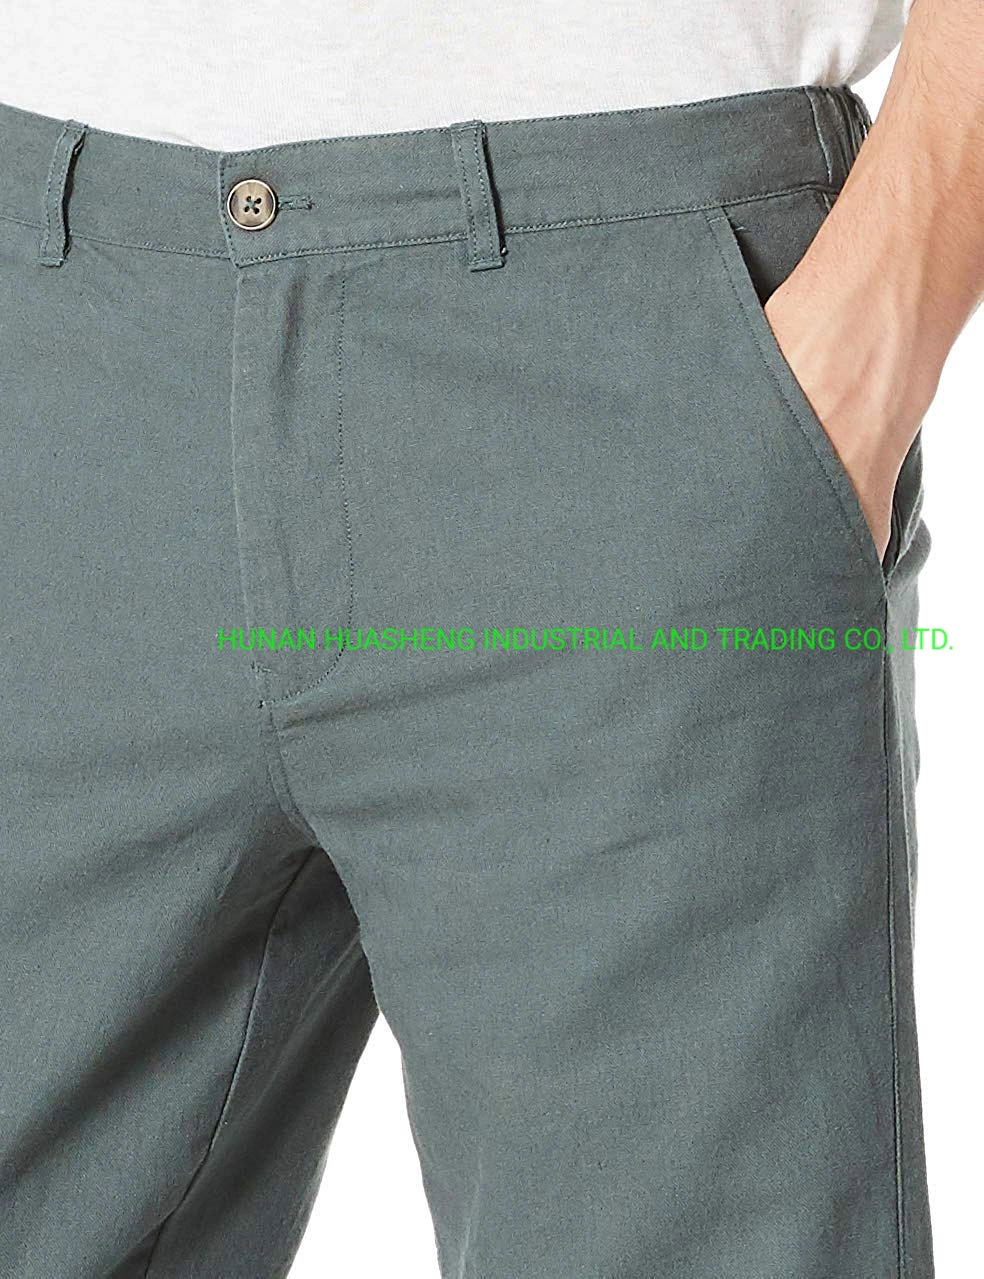 Men′s Breathable Drawstring Linen Cotton Blend Ninth Pants Grass Green